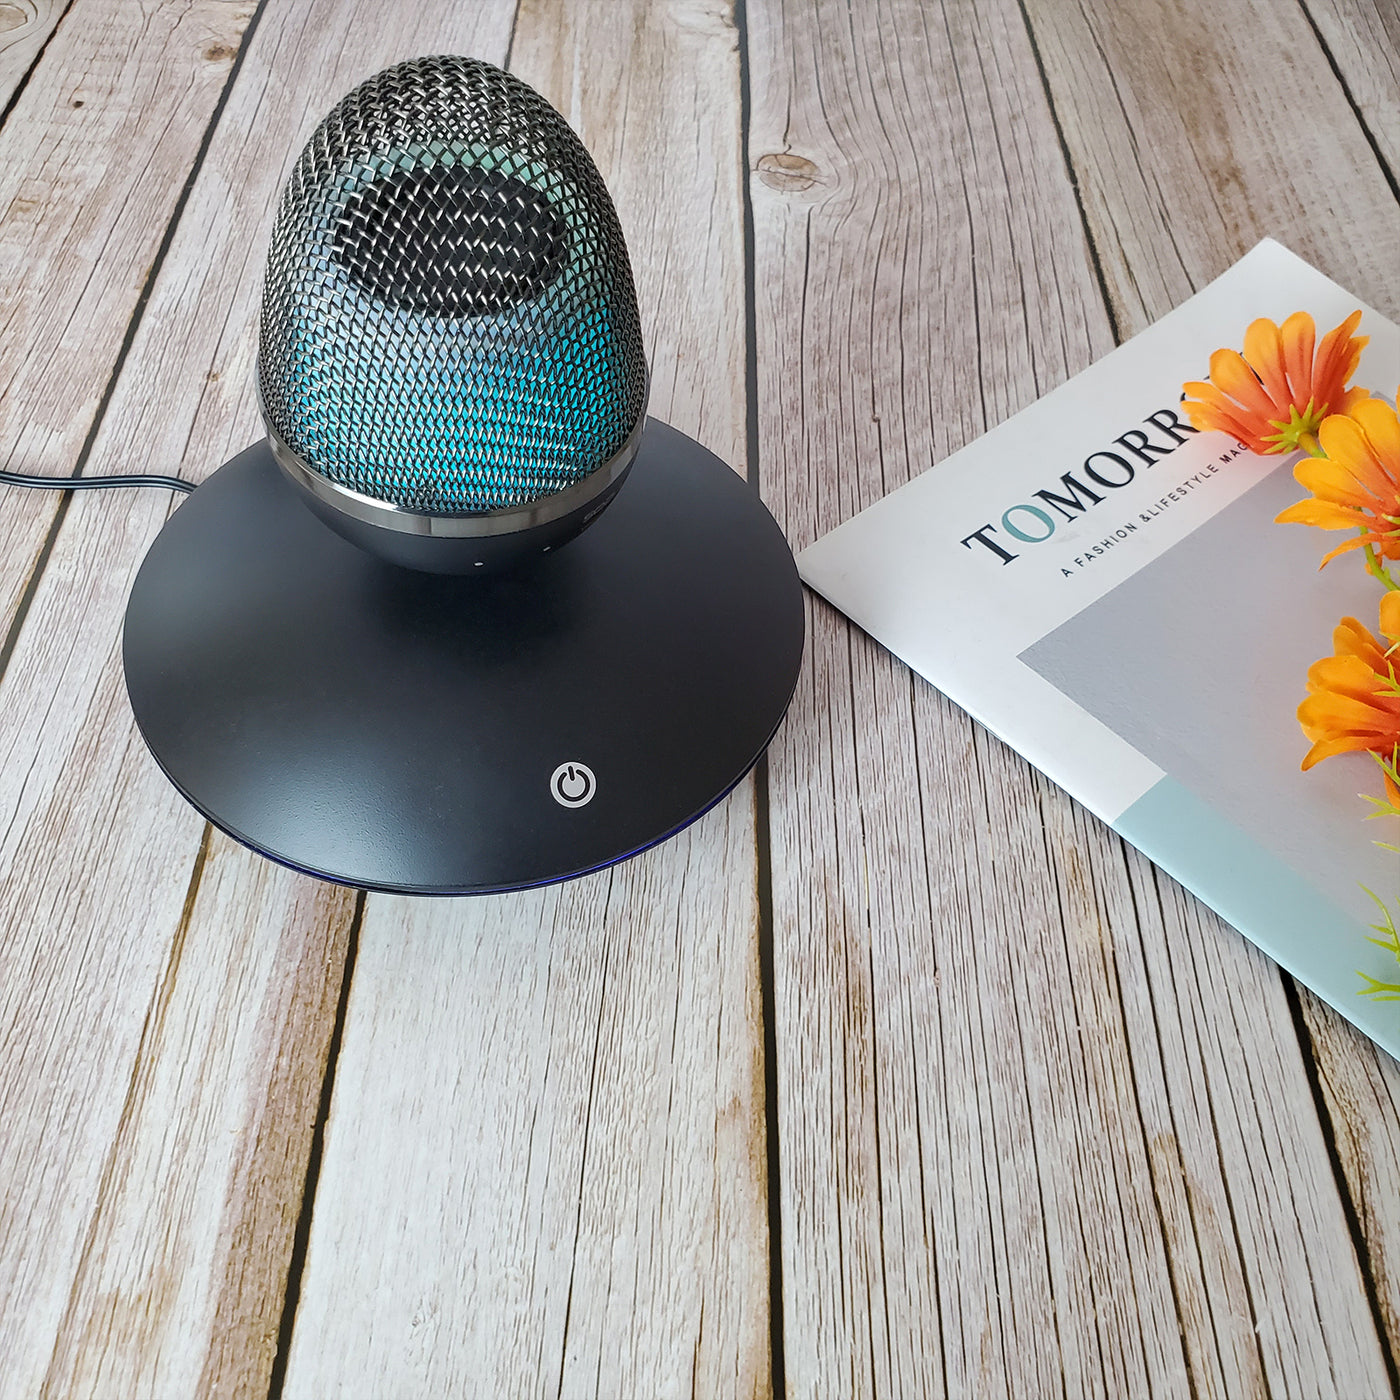 LANGTU SOOALL Vitamin Music Magnetic Levitating Bluetooth 5.0 Wireless Floating Speaker ft. Multi-Color LED Lights, Stereo Sound & Hands-Free Calls Black